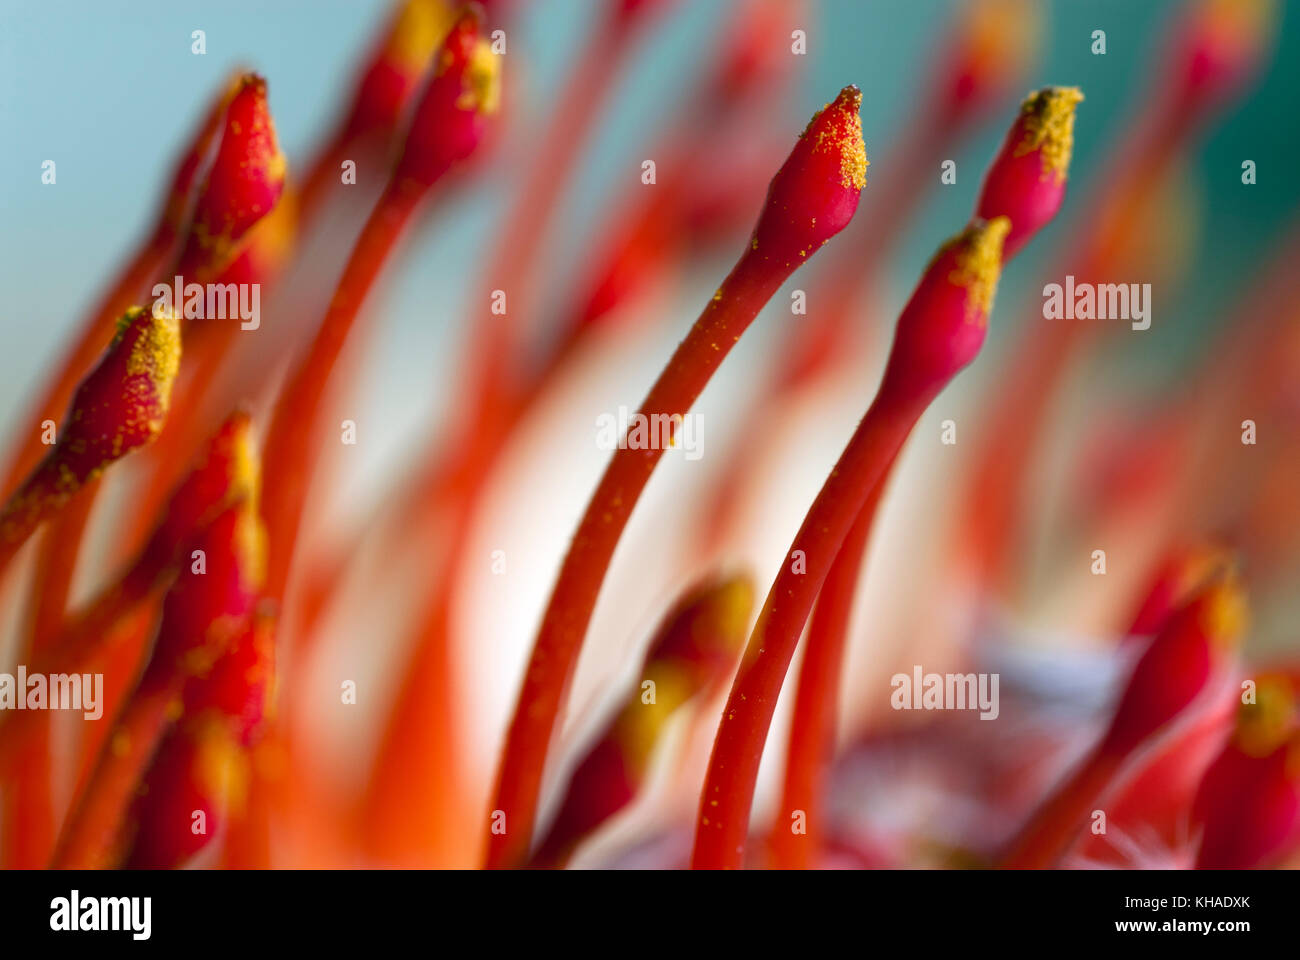 Close-up details using a bellows system to capture botanical details of an Australian Bottlebrush Shrub. Stock Photo